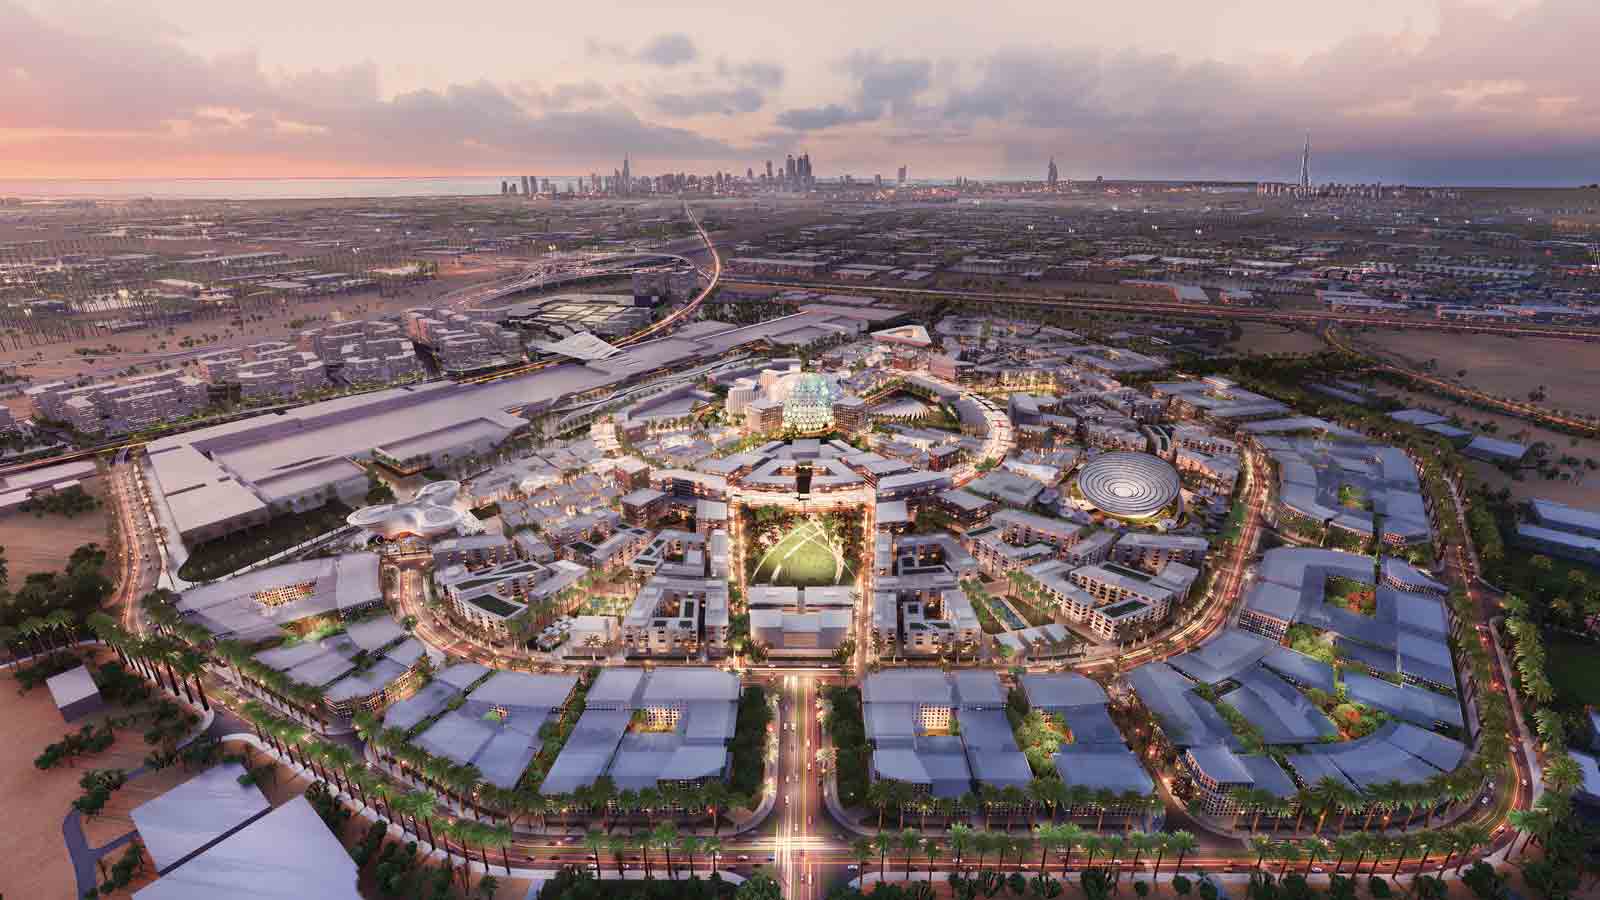 India Pavilion at Expo Dubai records 900,000 visitors till Feb 4